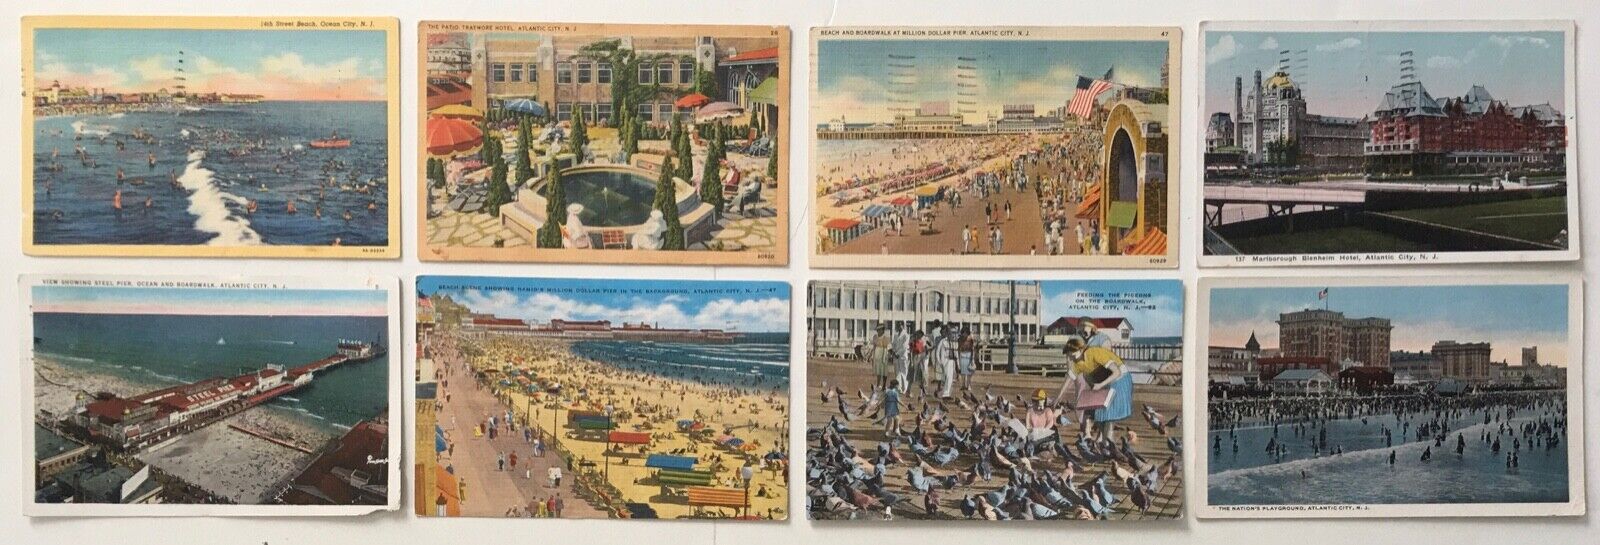 Linen Circulated Atlantic City Postcards Lot of 8 Hotel Pier Beach Scene 1916-49